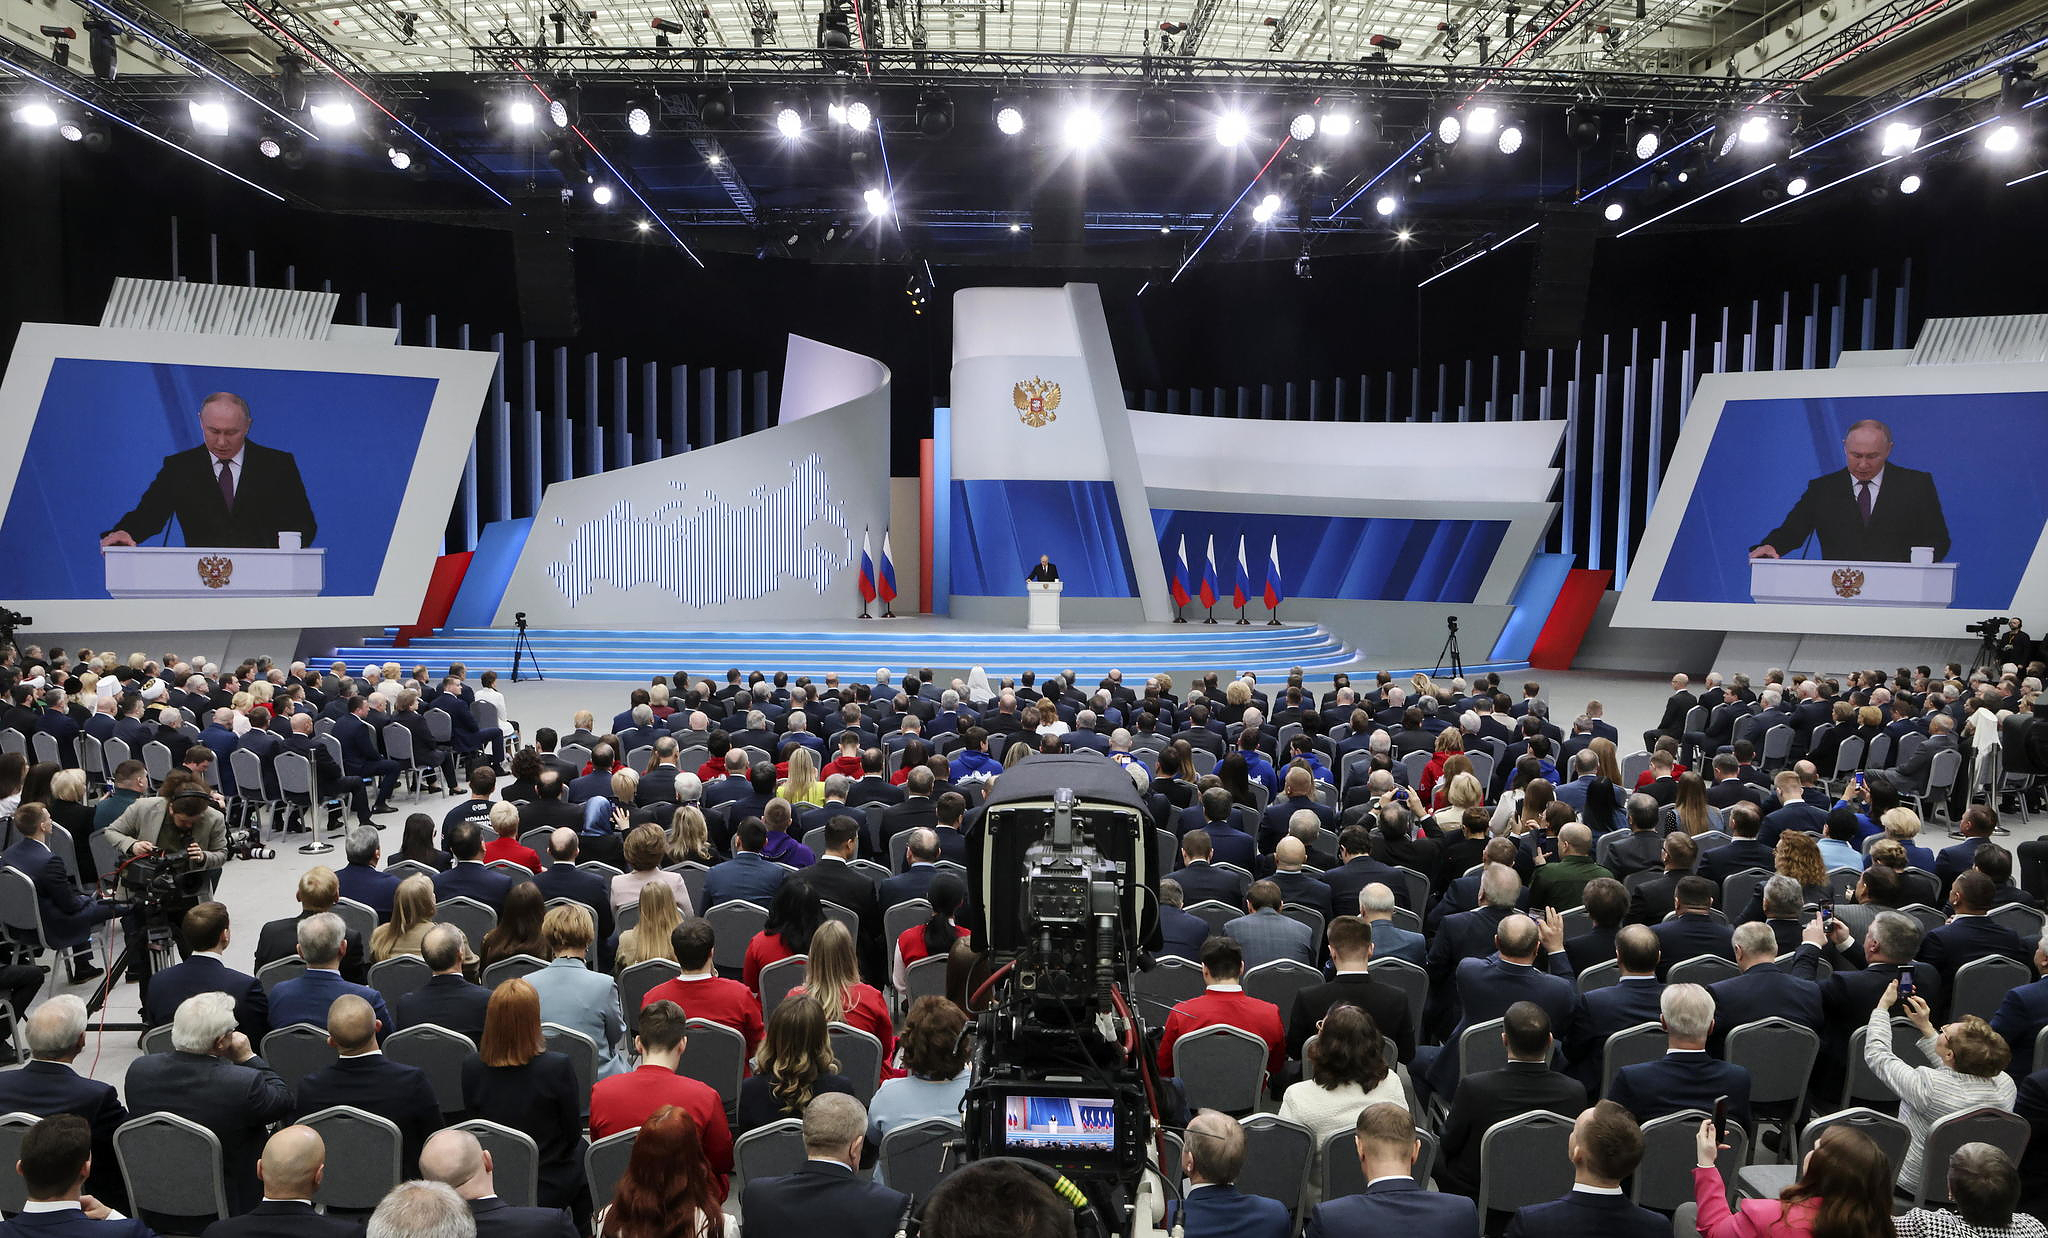 Putin threatens global nuclear war if West sends troops to Ukraine